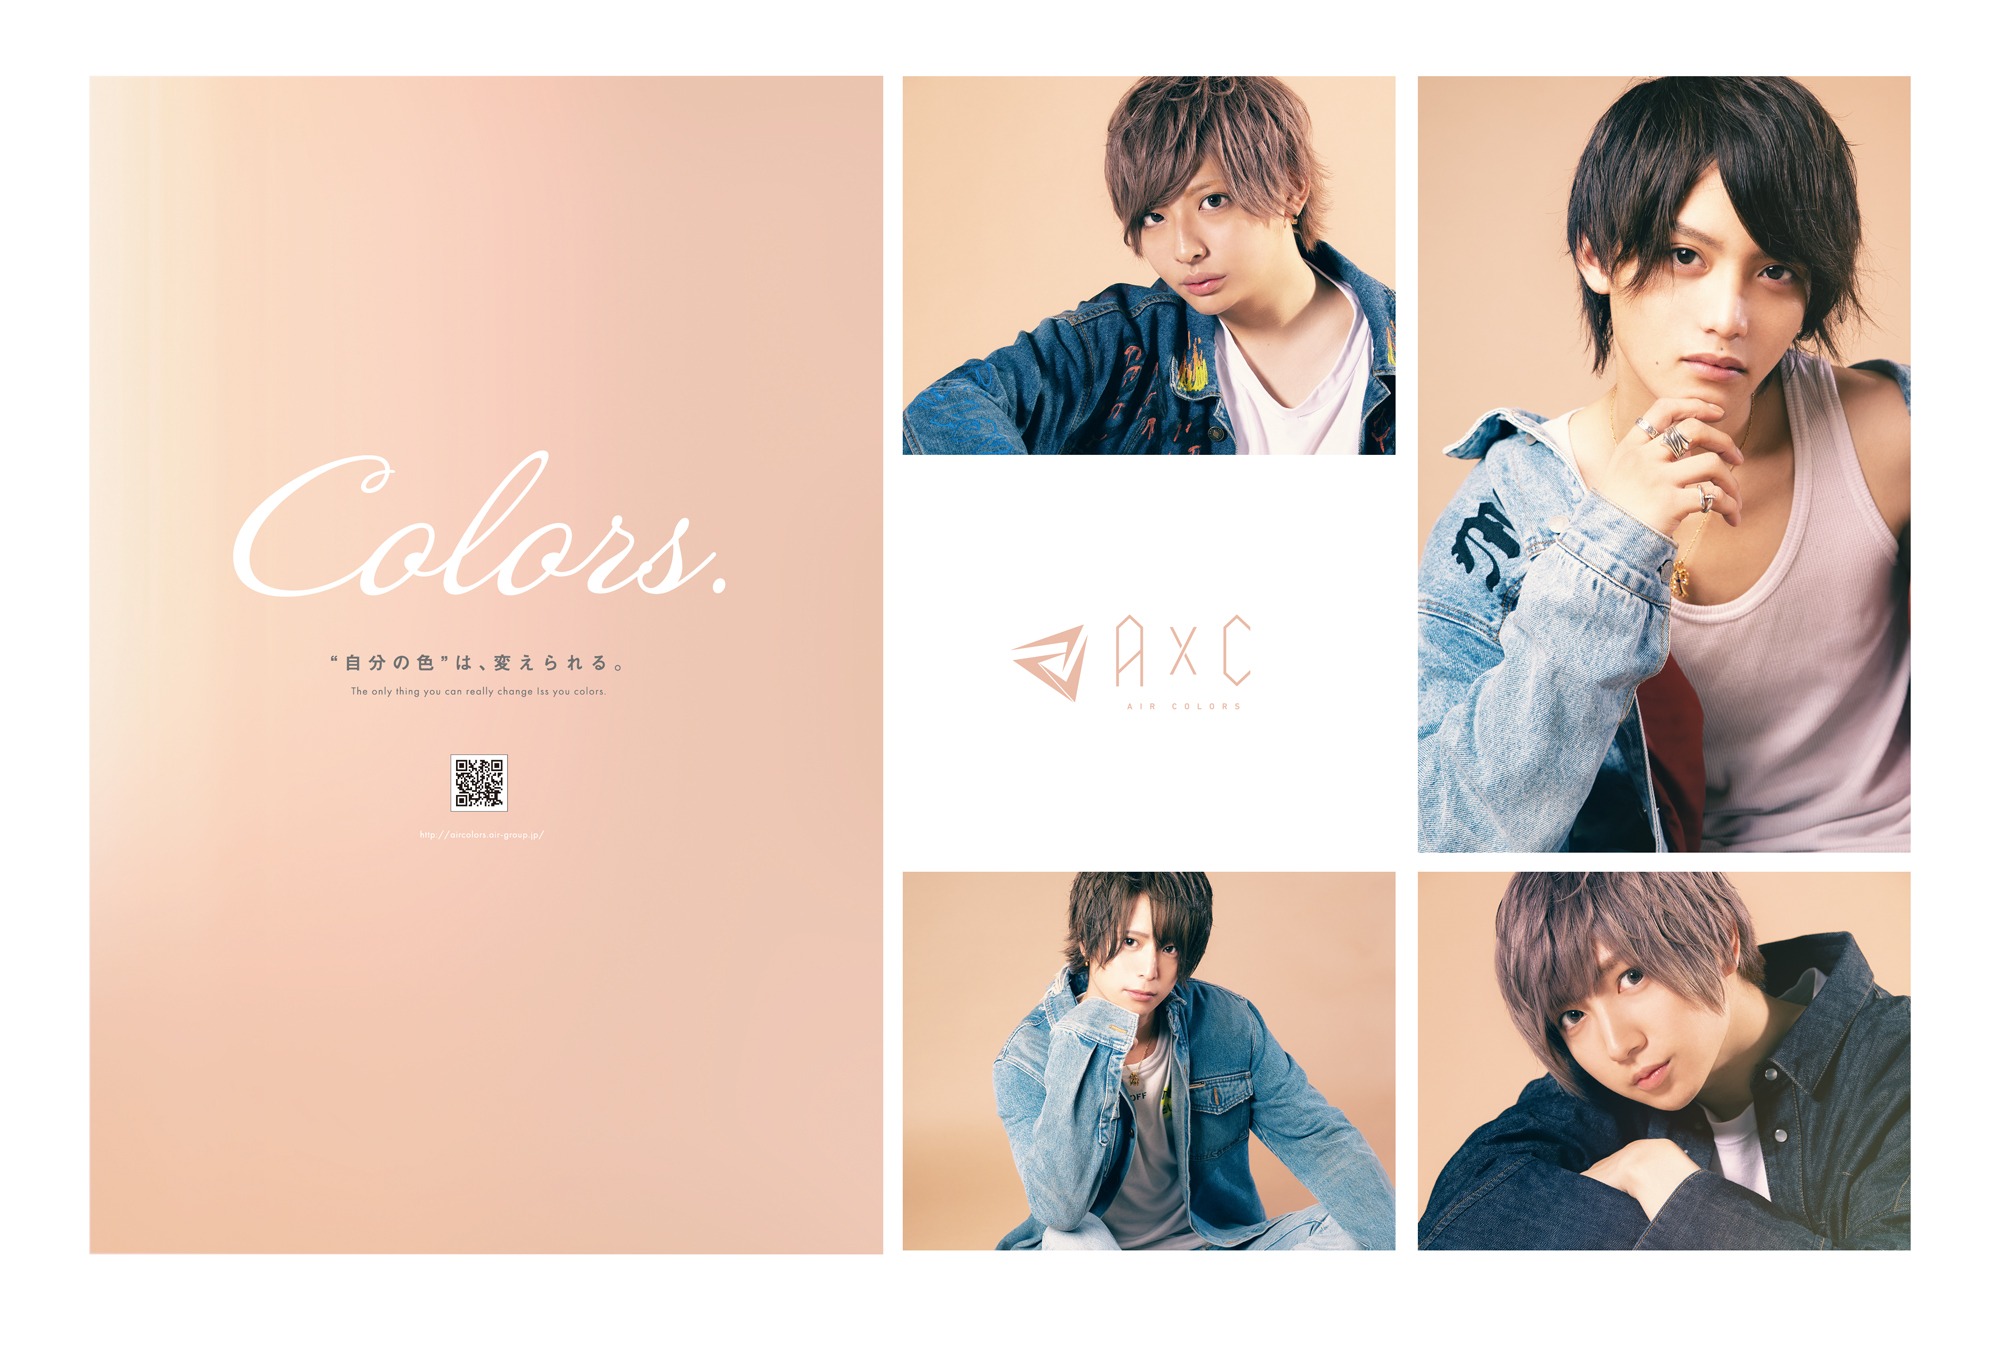 201907_yplus_colors05_ol-01